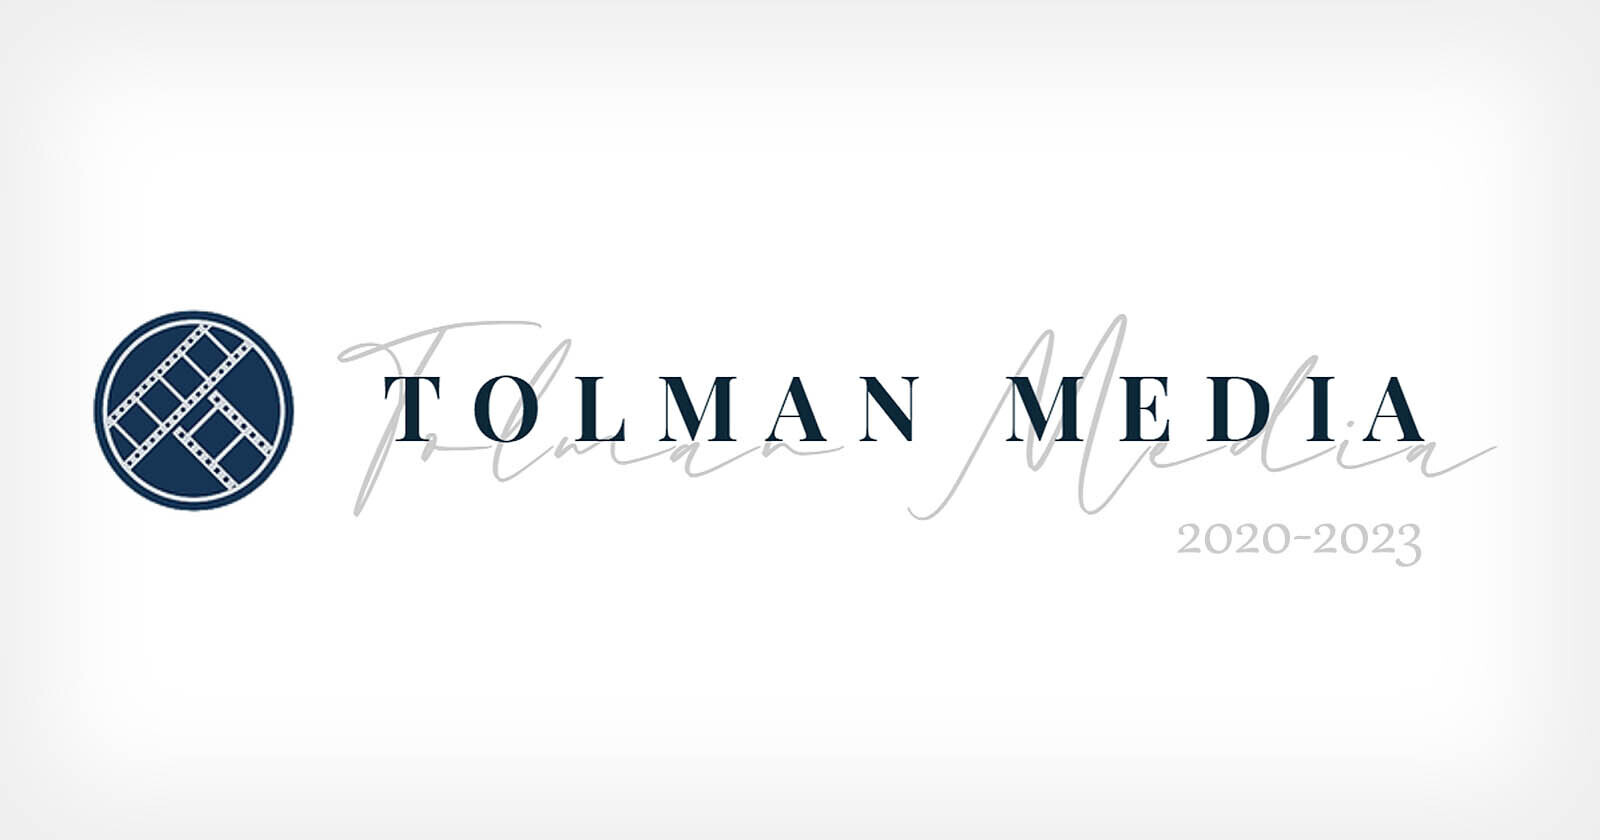  tolman media shutdown leaves photographers clients empty-handed 